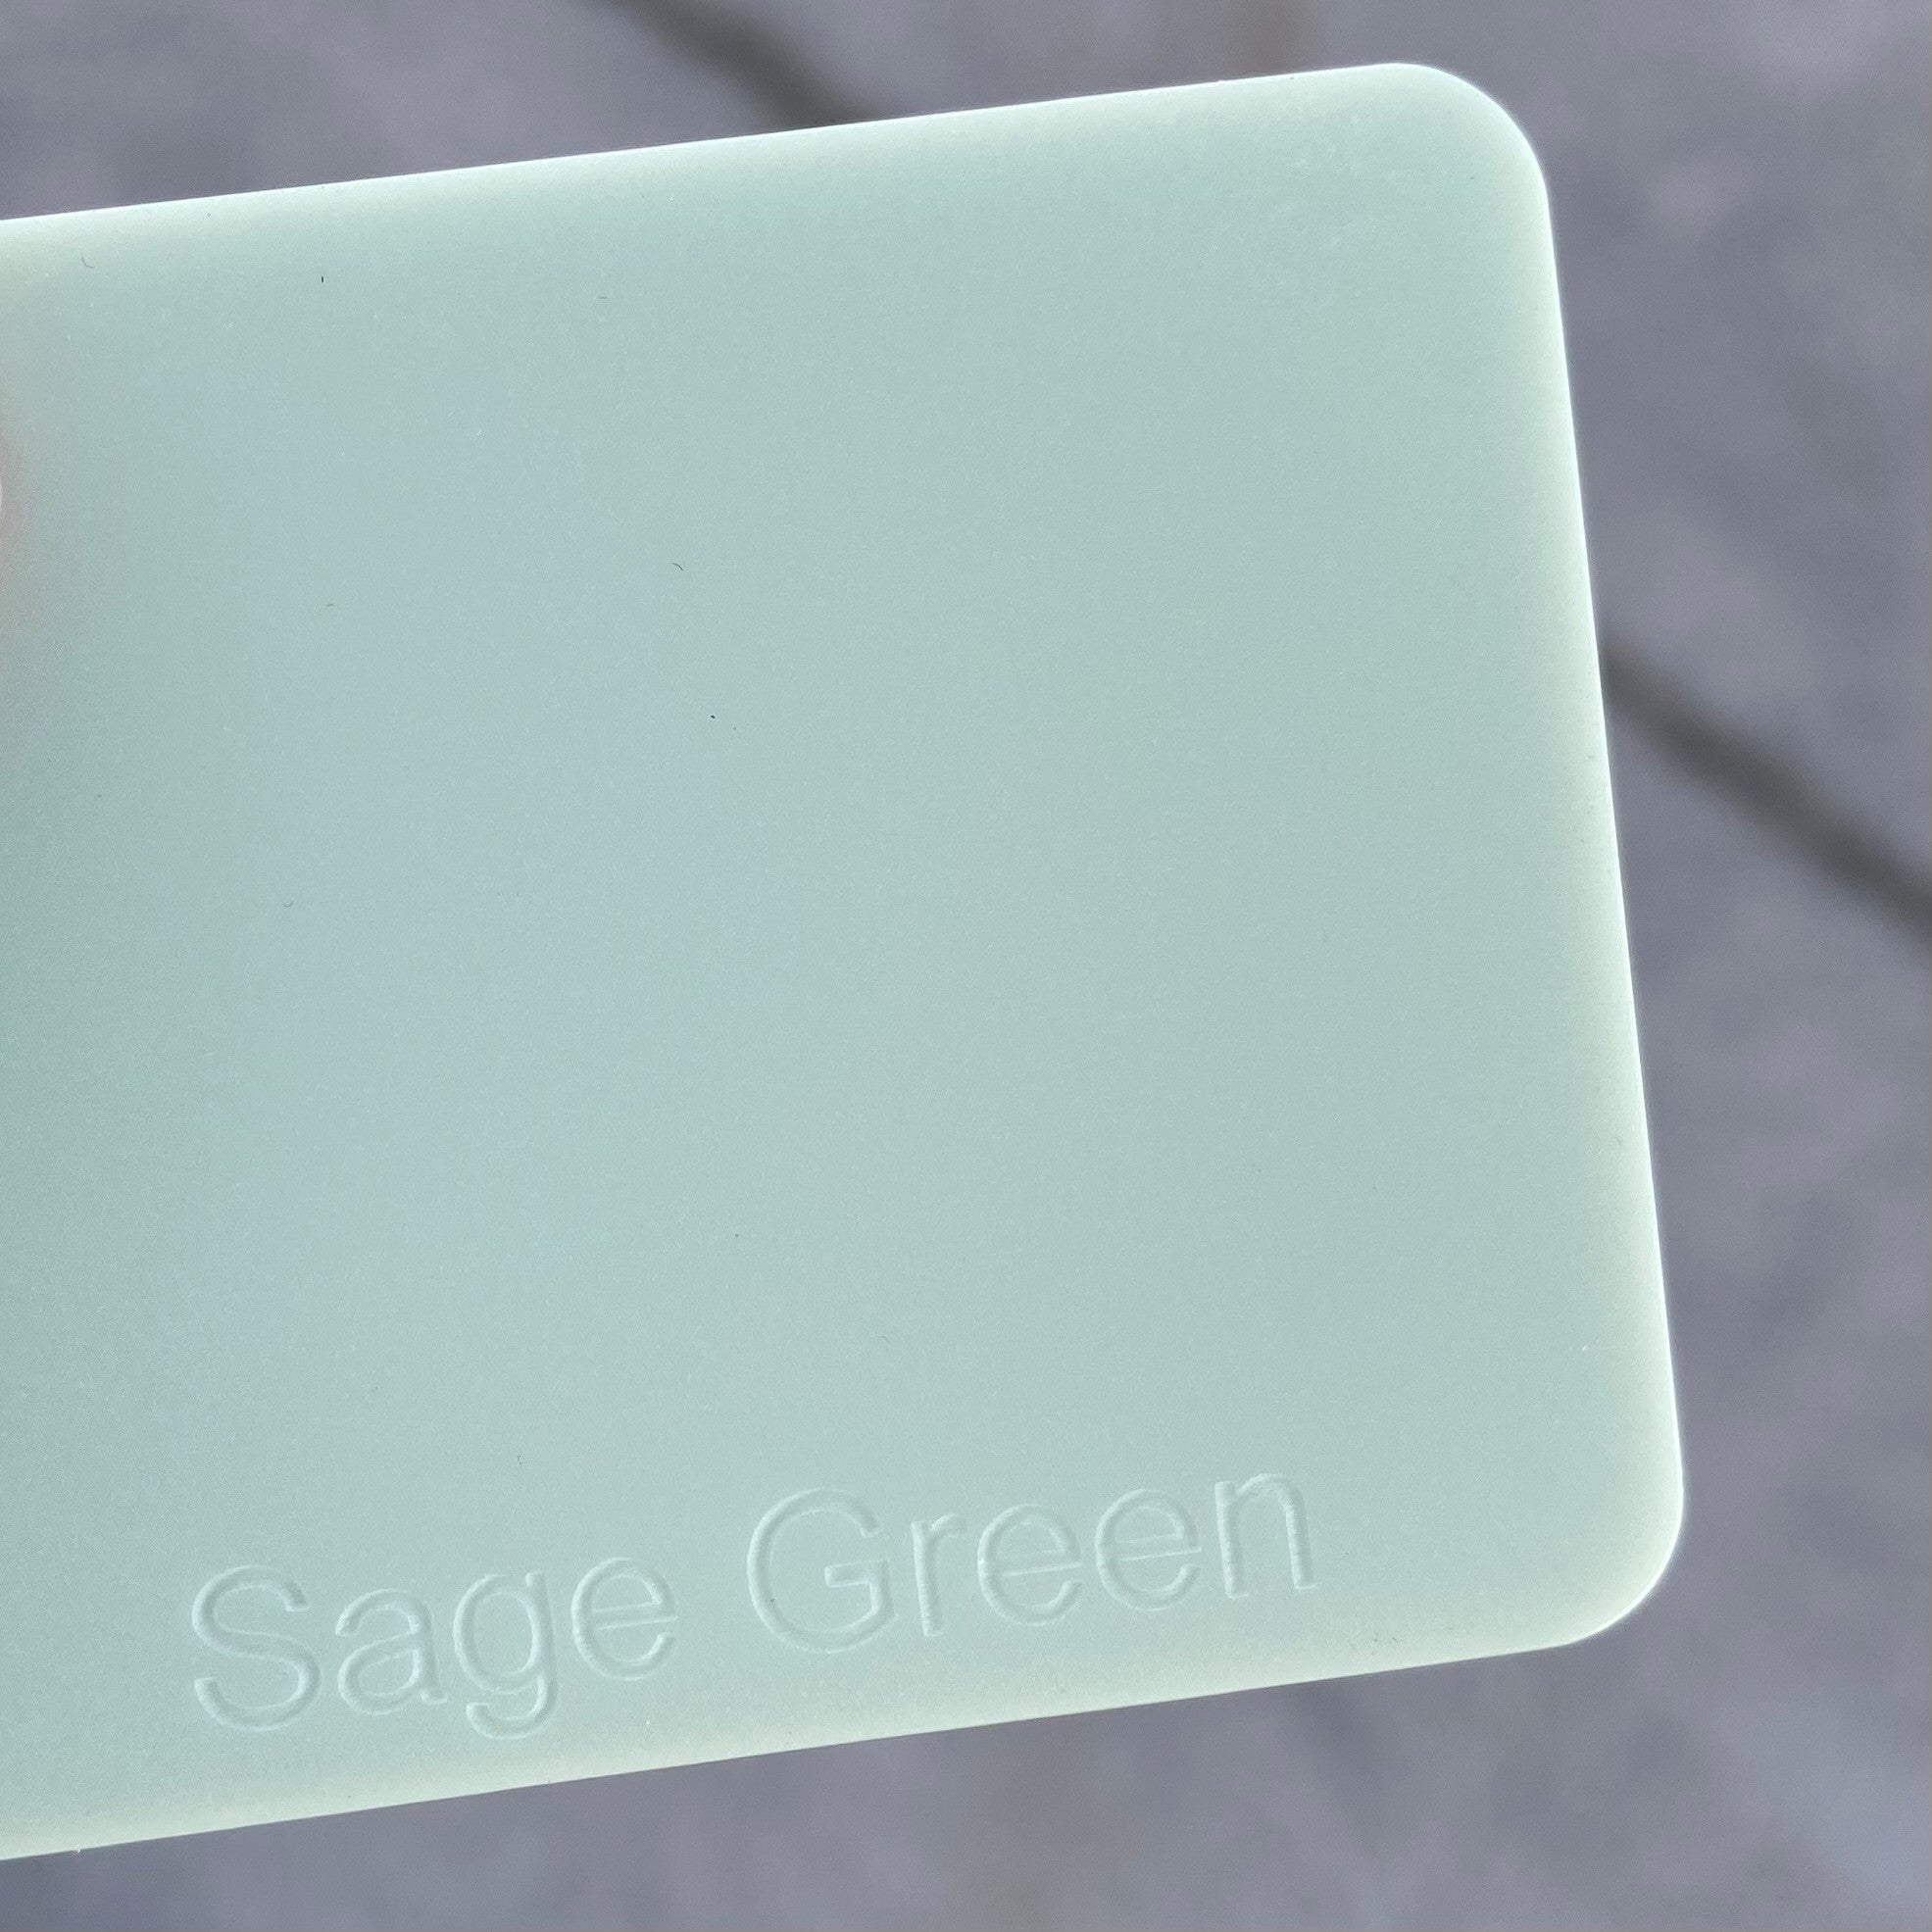 Sage Green – Total Acrylic Supplies